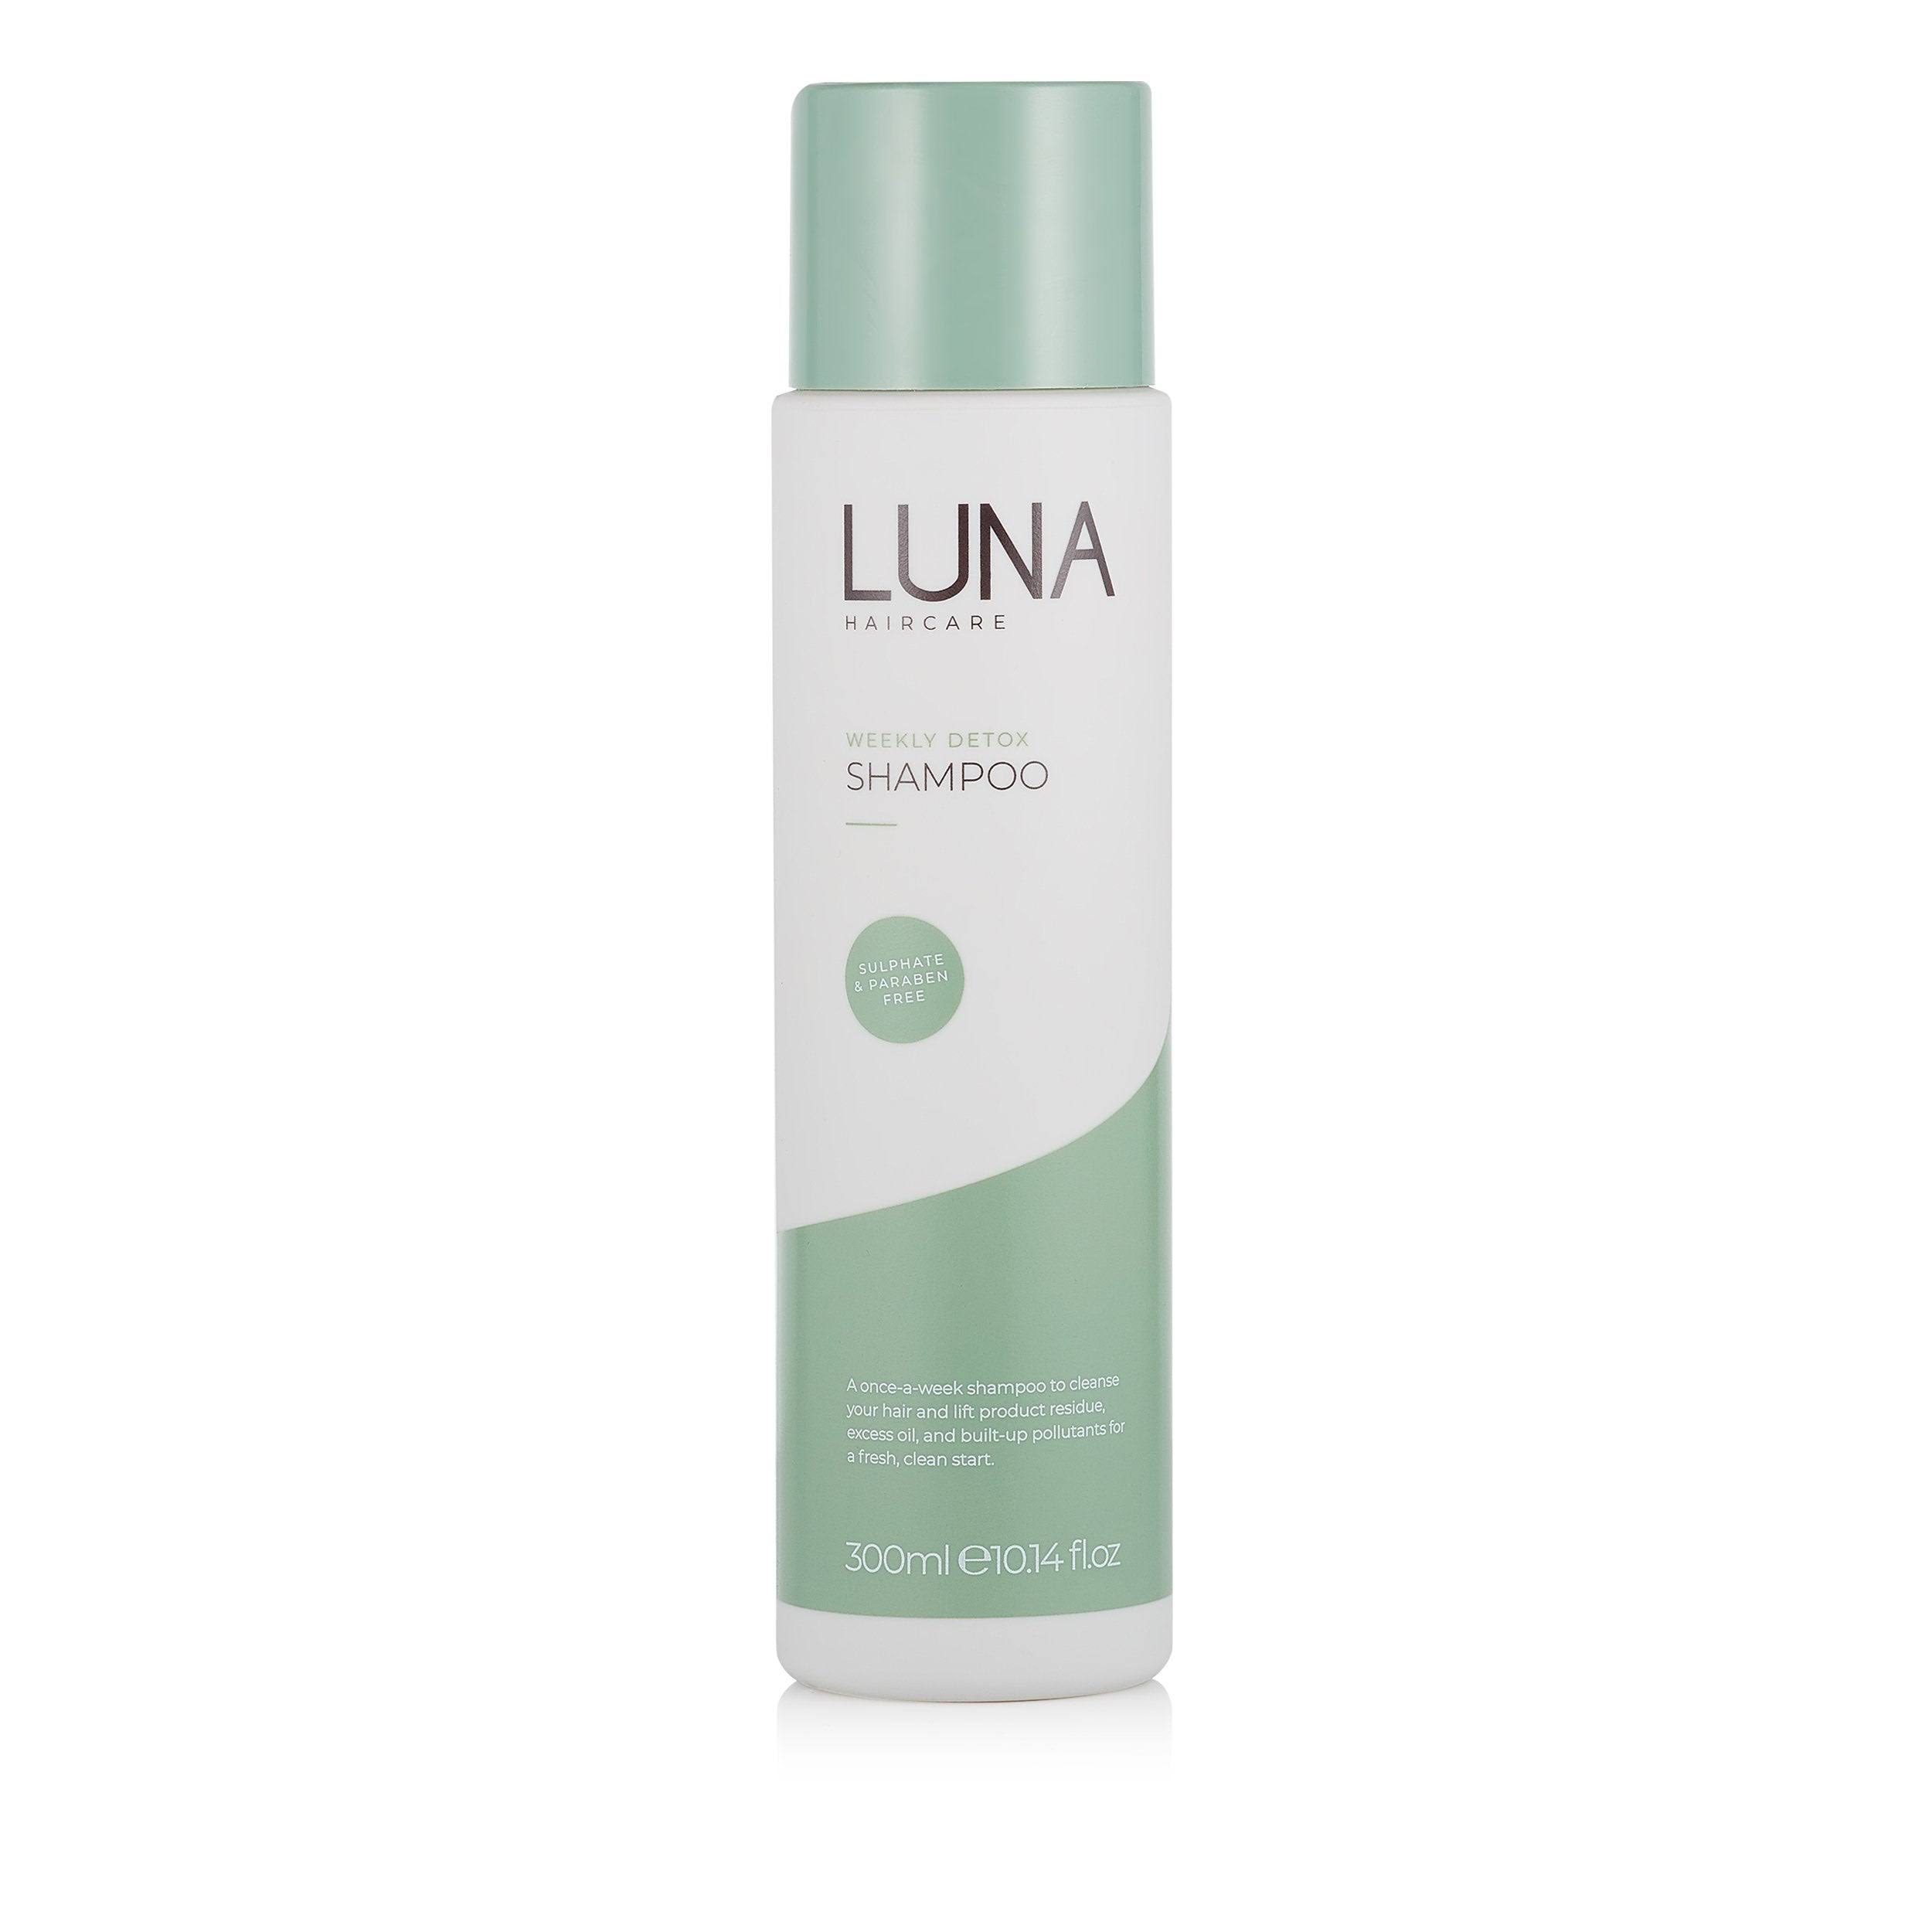 Luna Weekly Detox Shampoo - 300ml